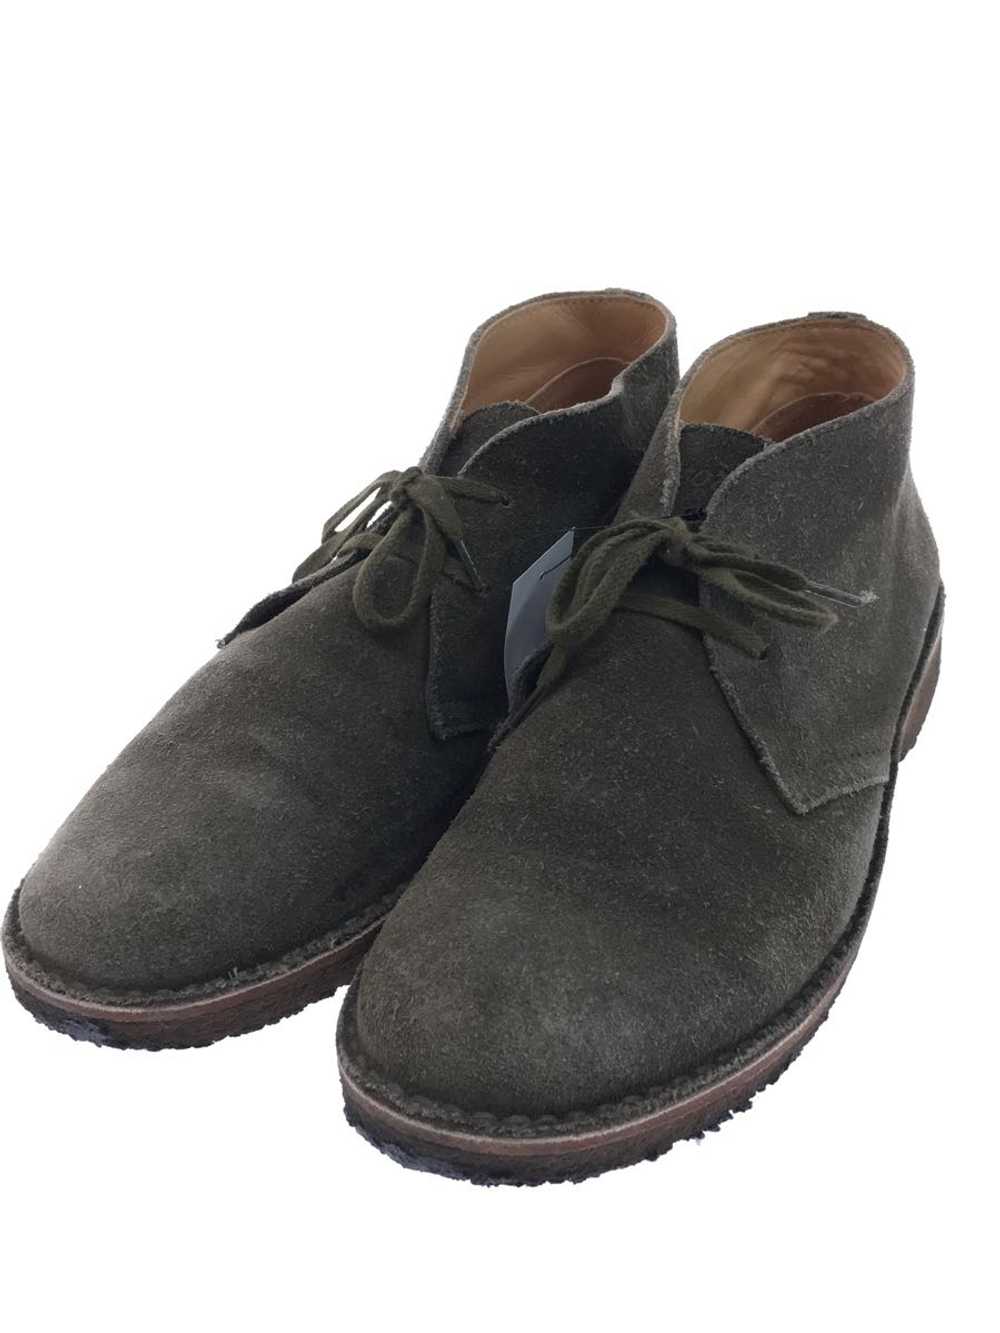 Astorflex Boots/43/Khk/Suede Shoes BYH69 - image 2